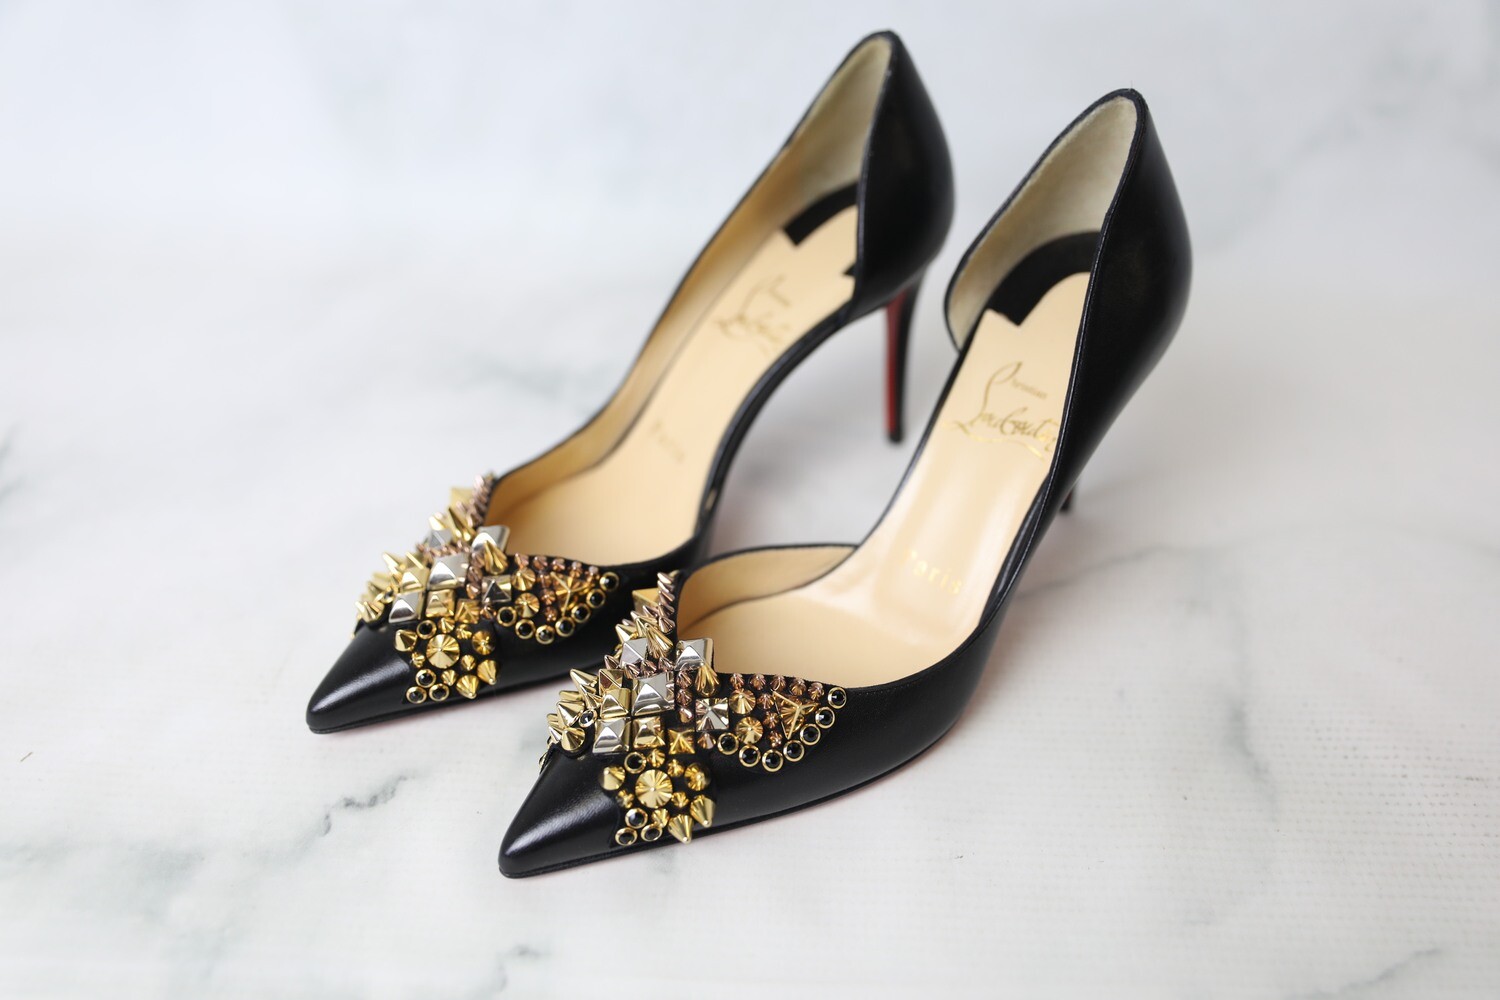 Christian Shoes Heels Black Farfaclou 85mm Nude Gold Spike A279 Pumps, New in Box WA001 - Julia Rose Boston | Shop